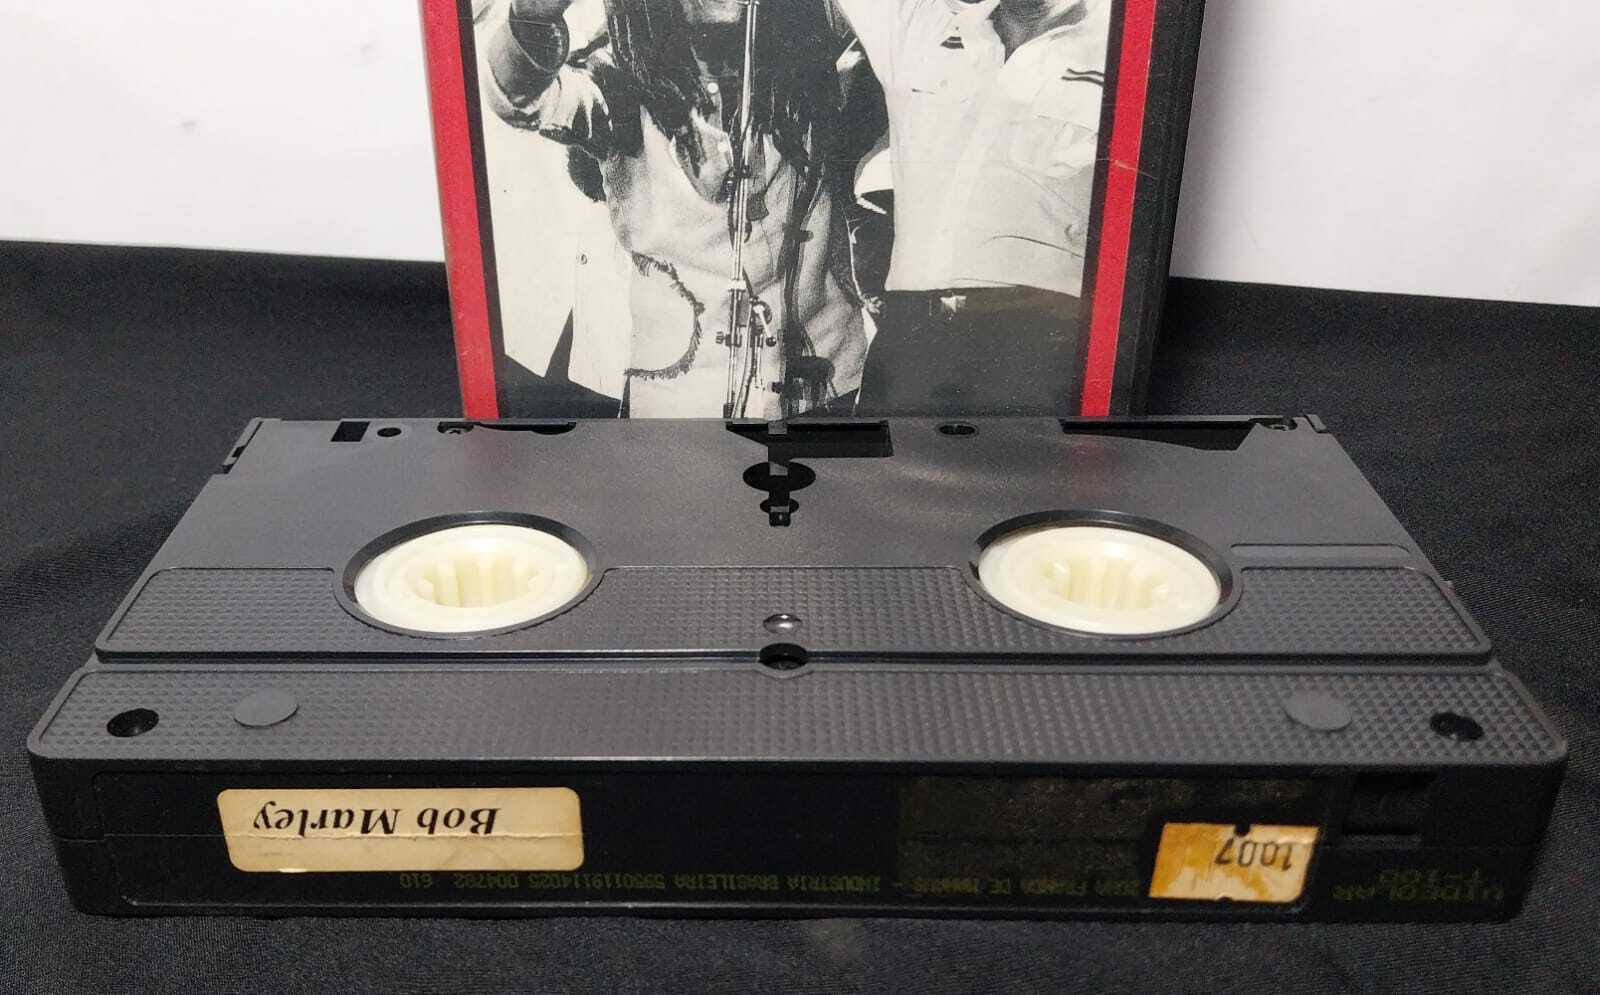 Fita VHS - Bob Marley - One Love Peace Concert